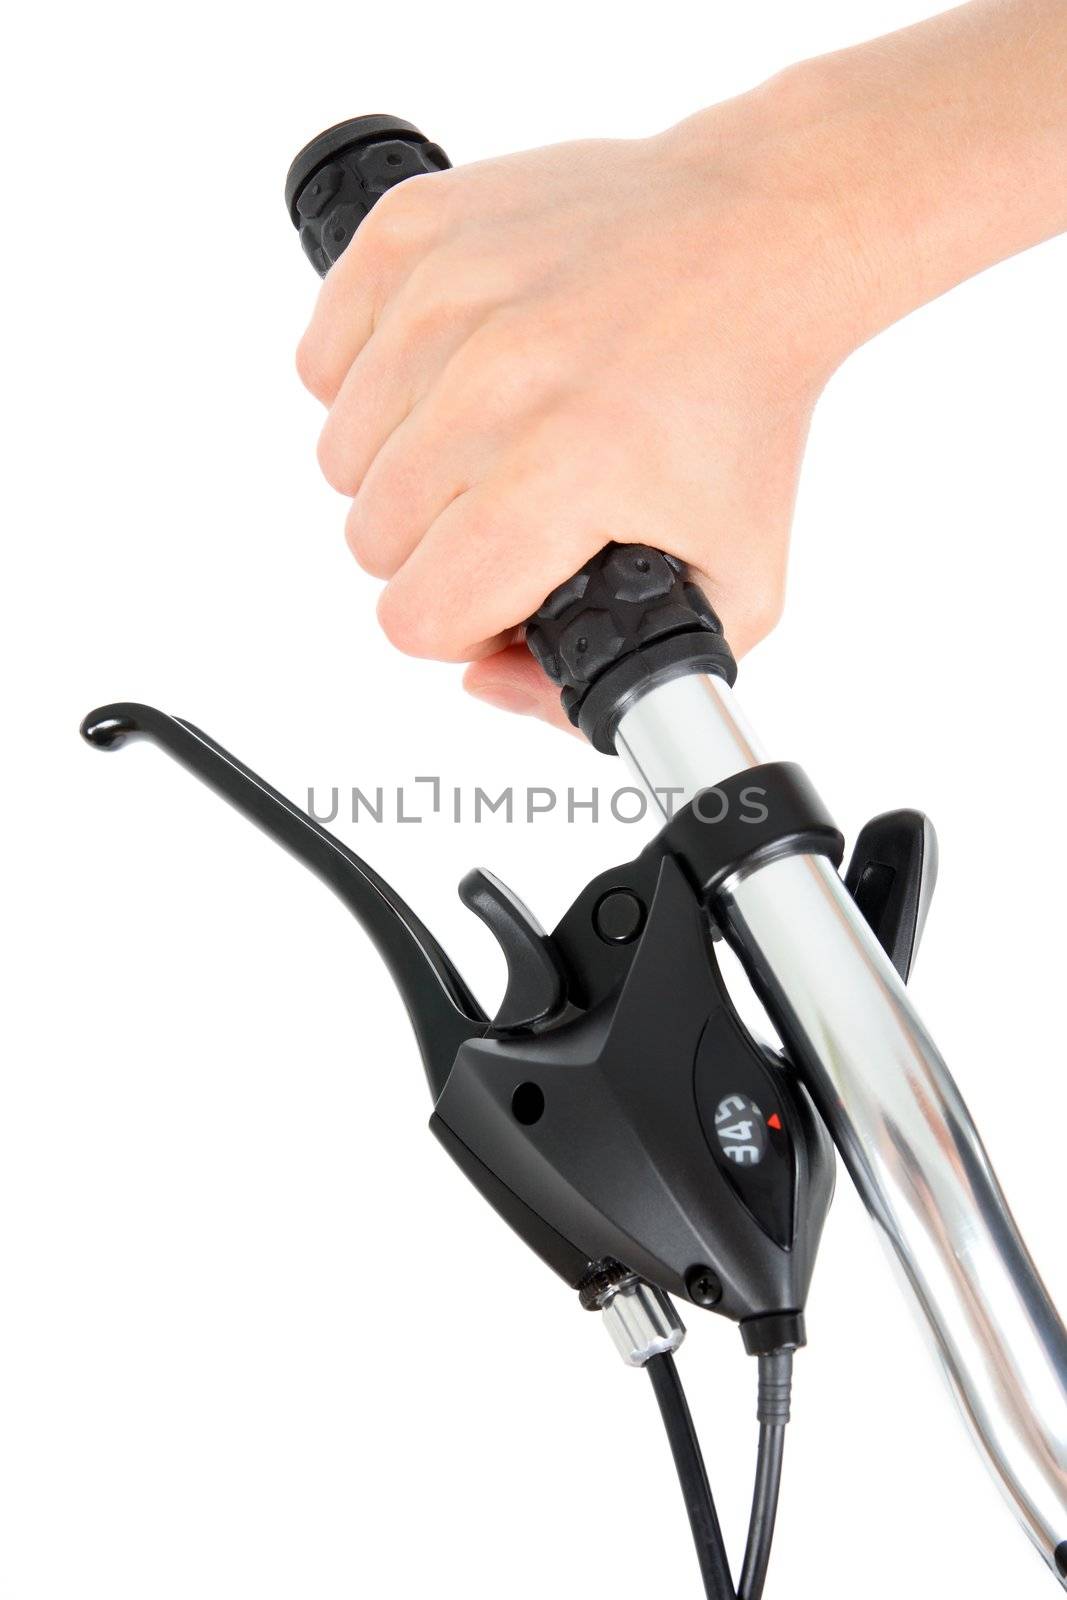 Hand holding bicycle handlebar by anikasalsera